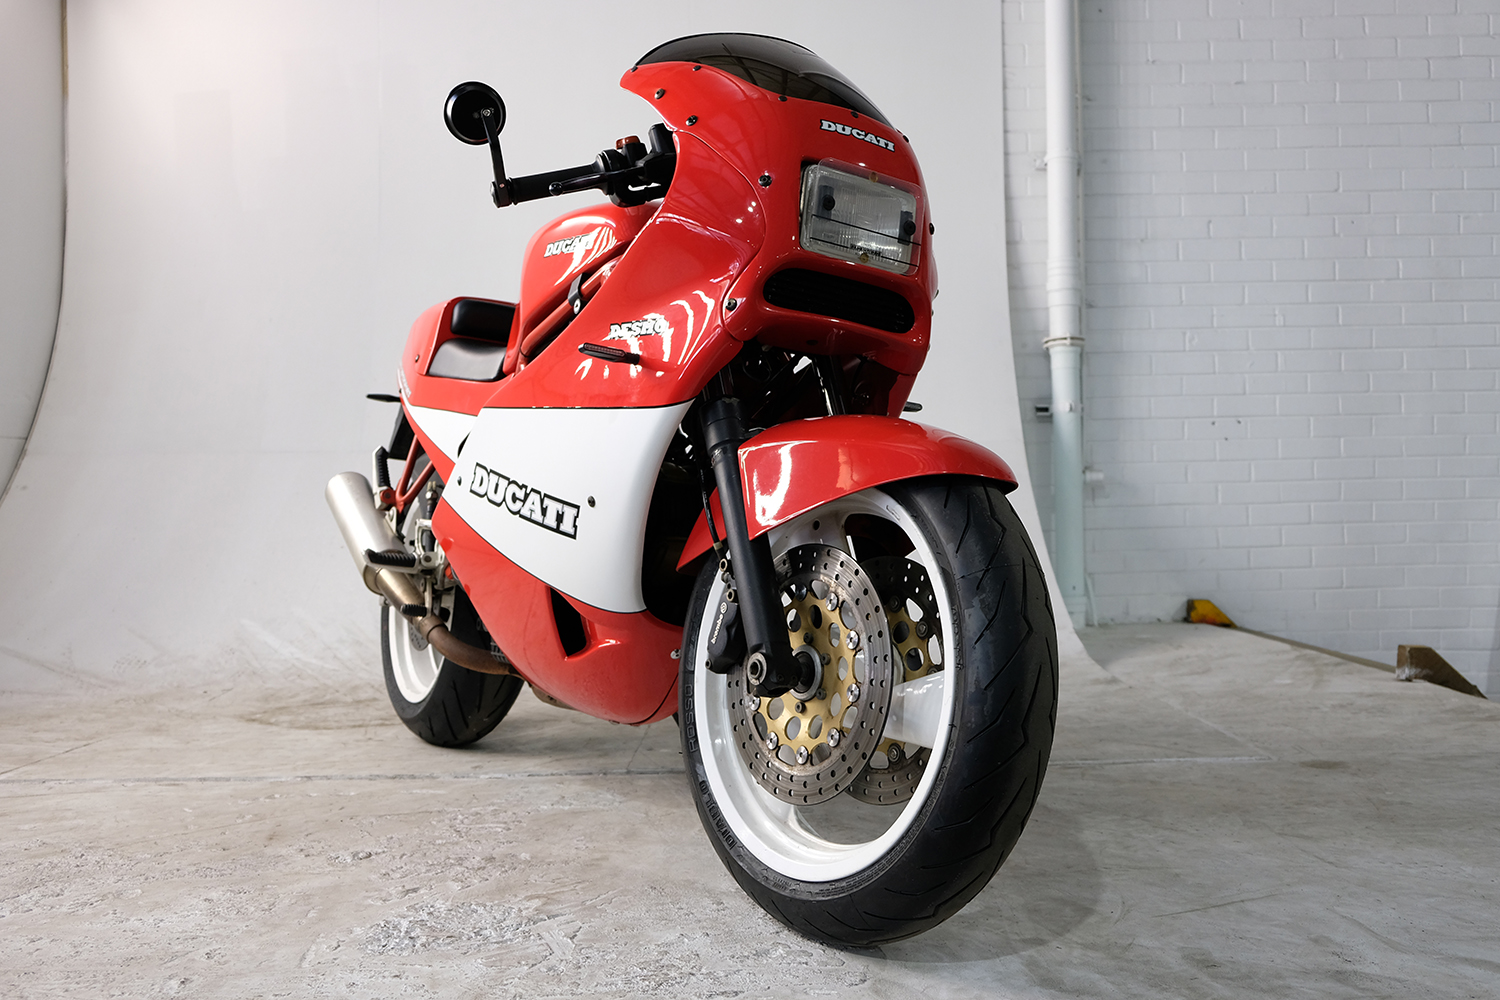 Ducati Desmo_0019_DSCF1475.jpg